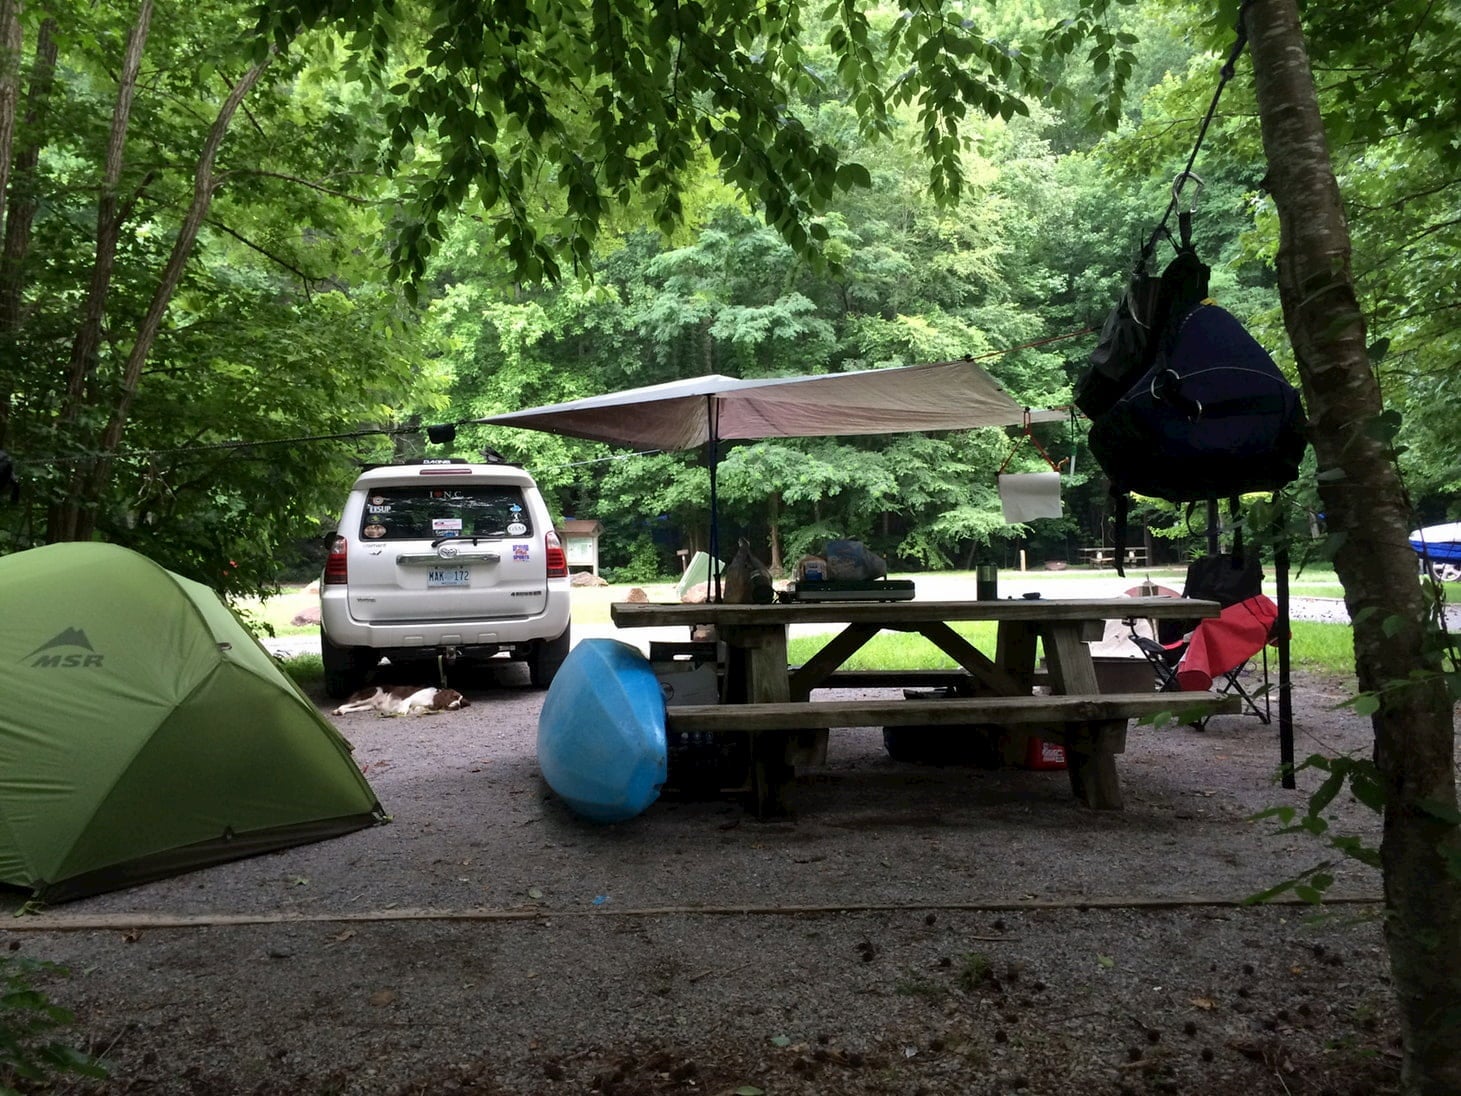 Campsite with tent, umbrella, and kayak,.